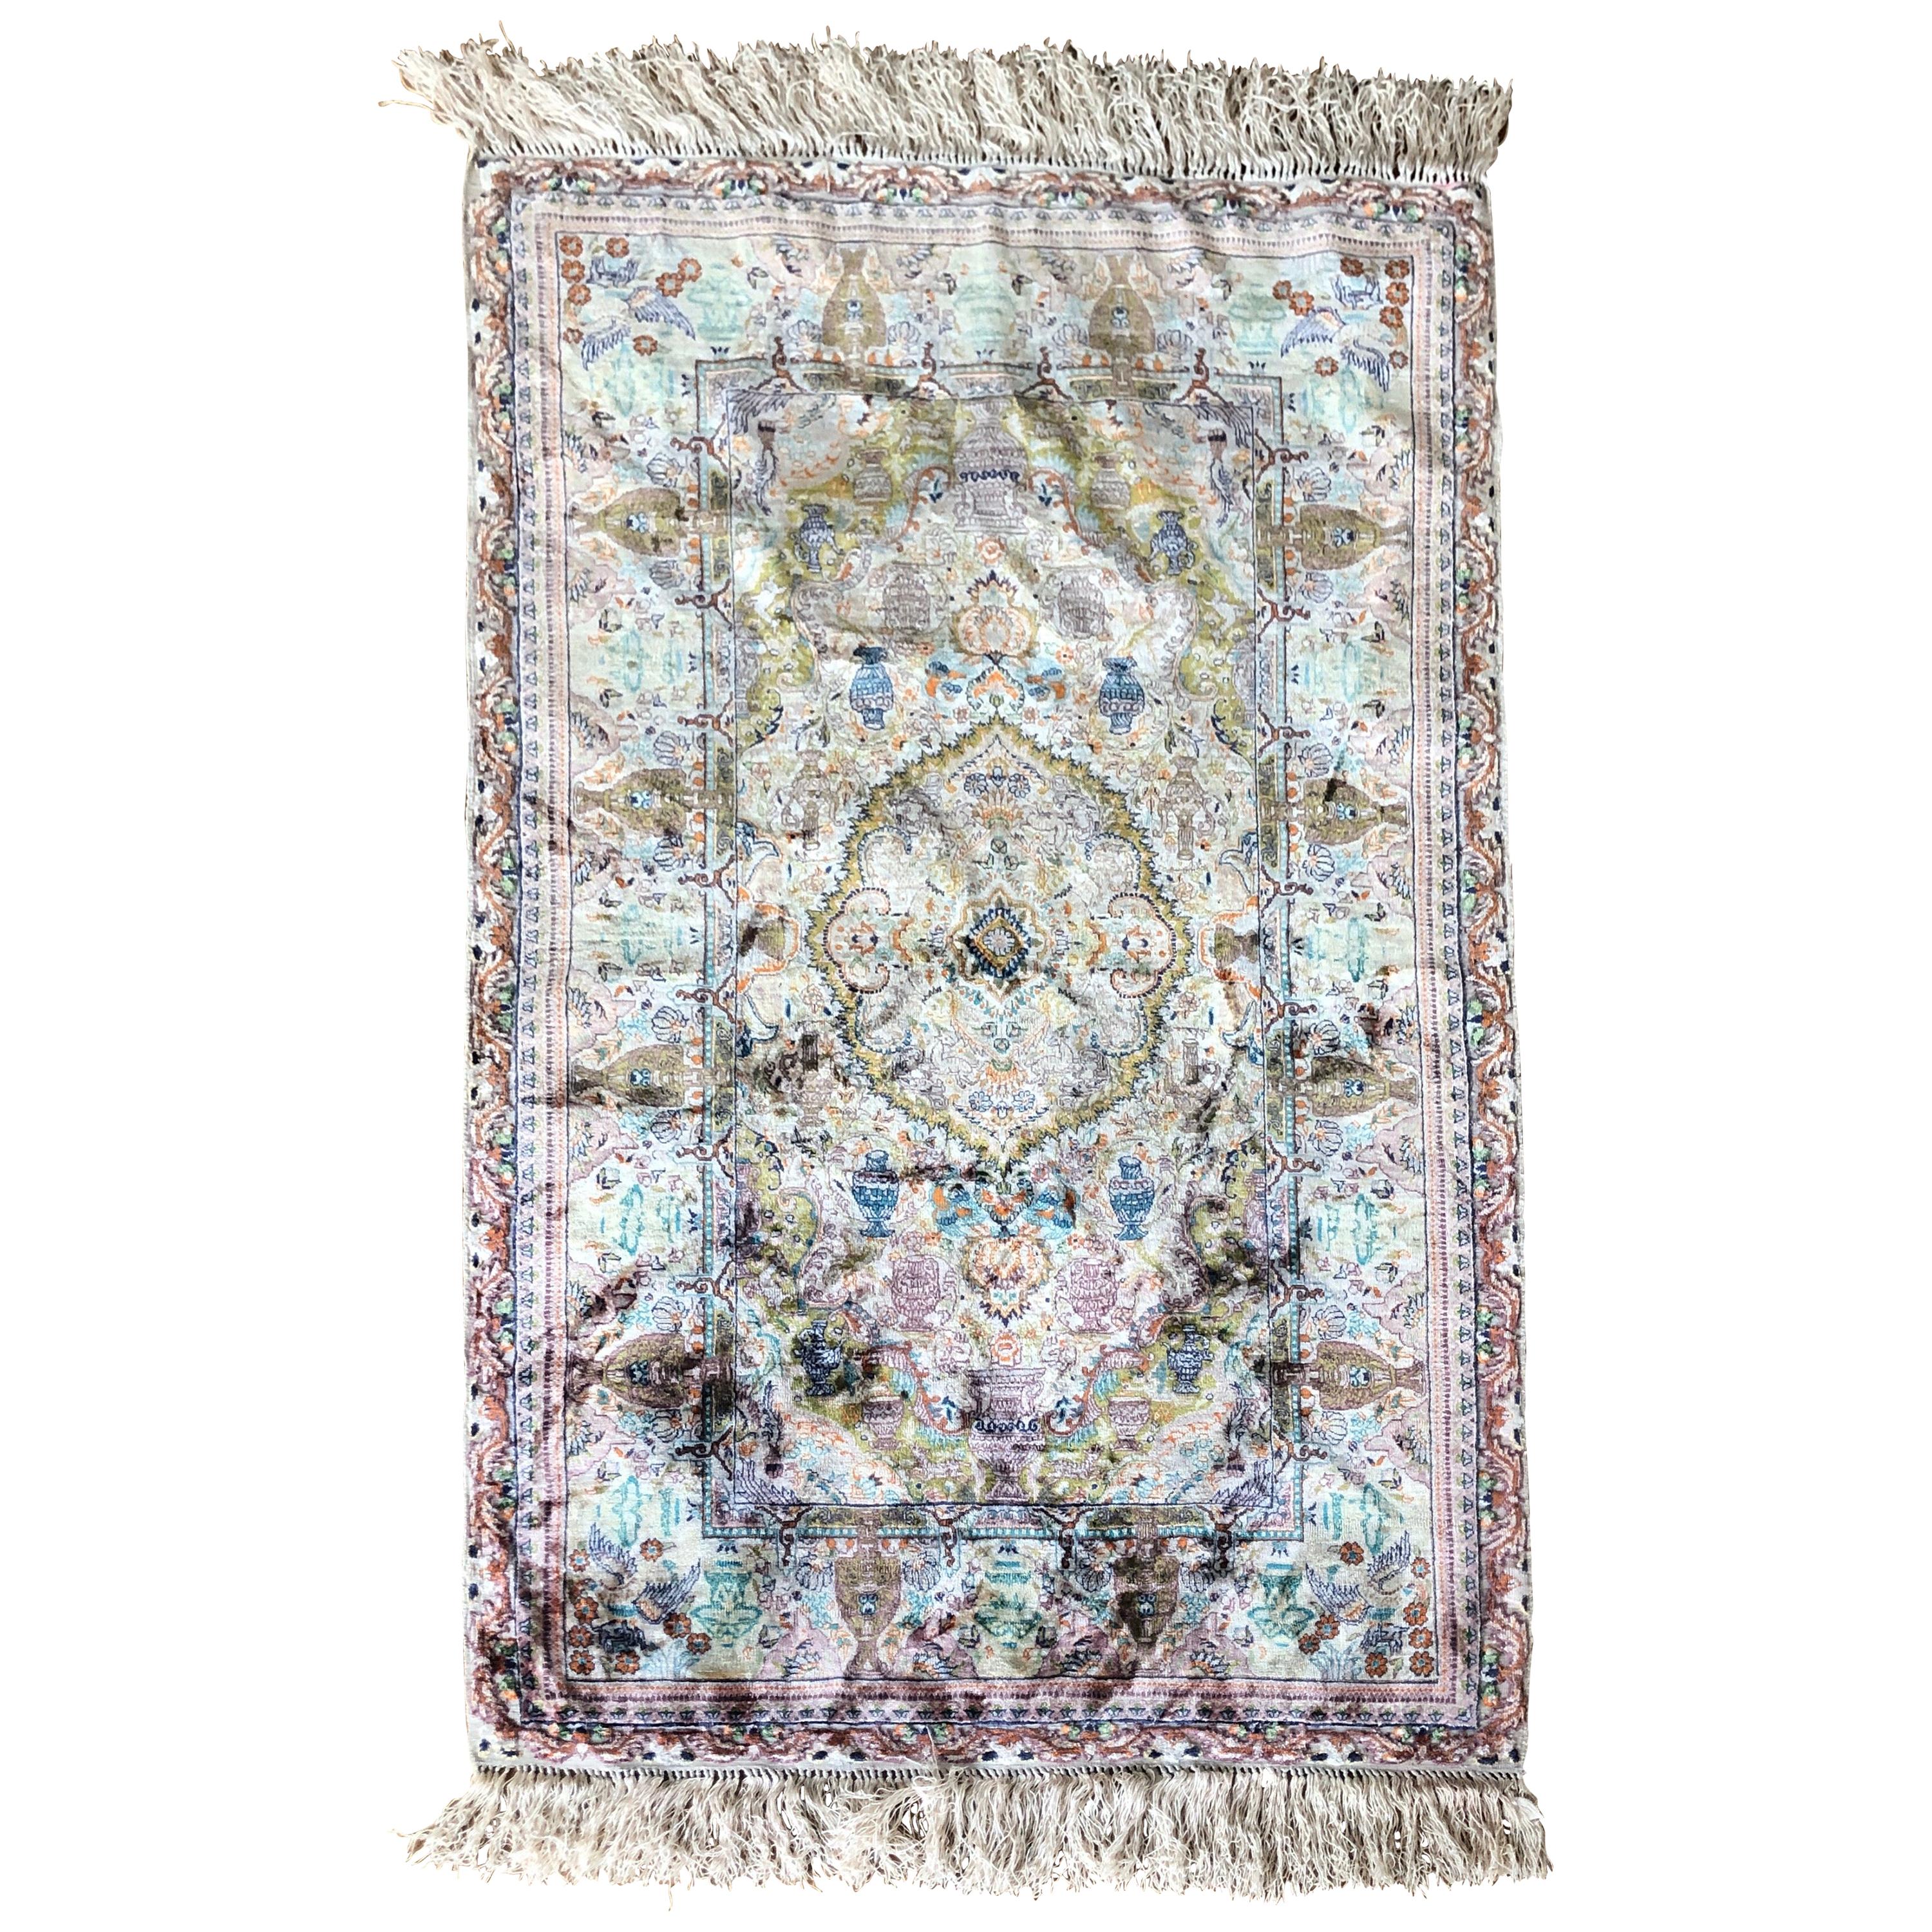 20th Century Silk Handmade Carpet in Light Colors